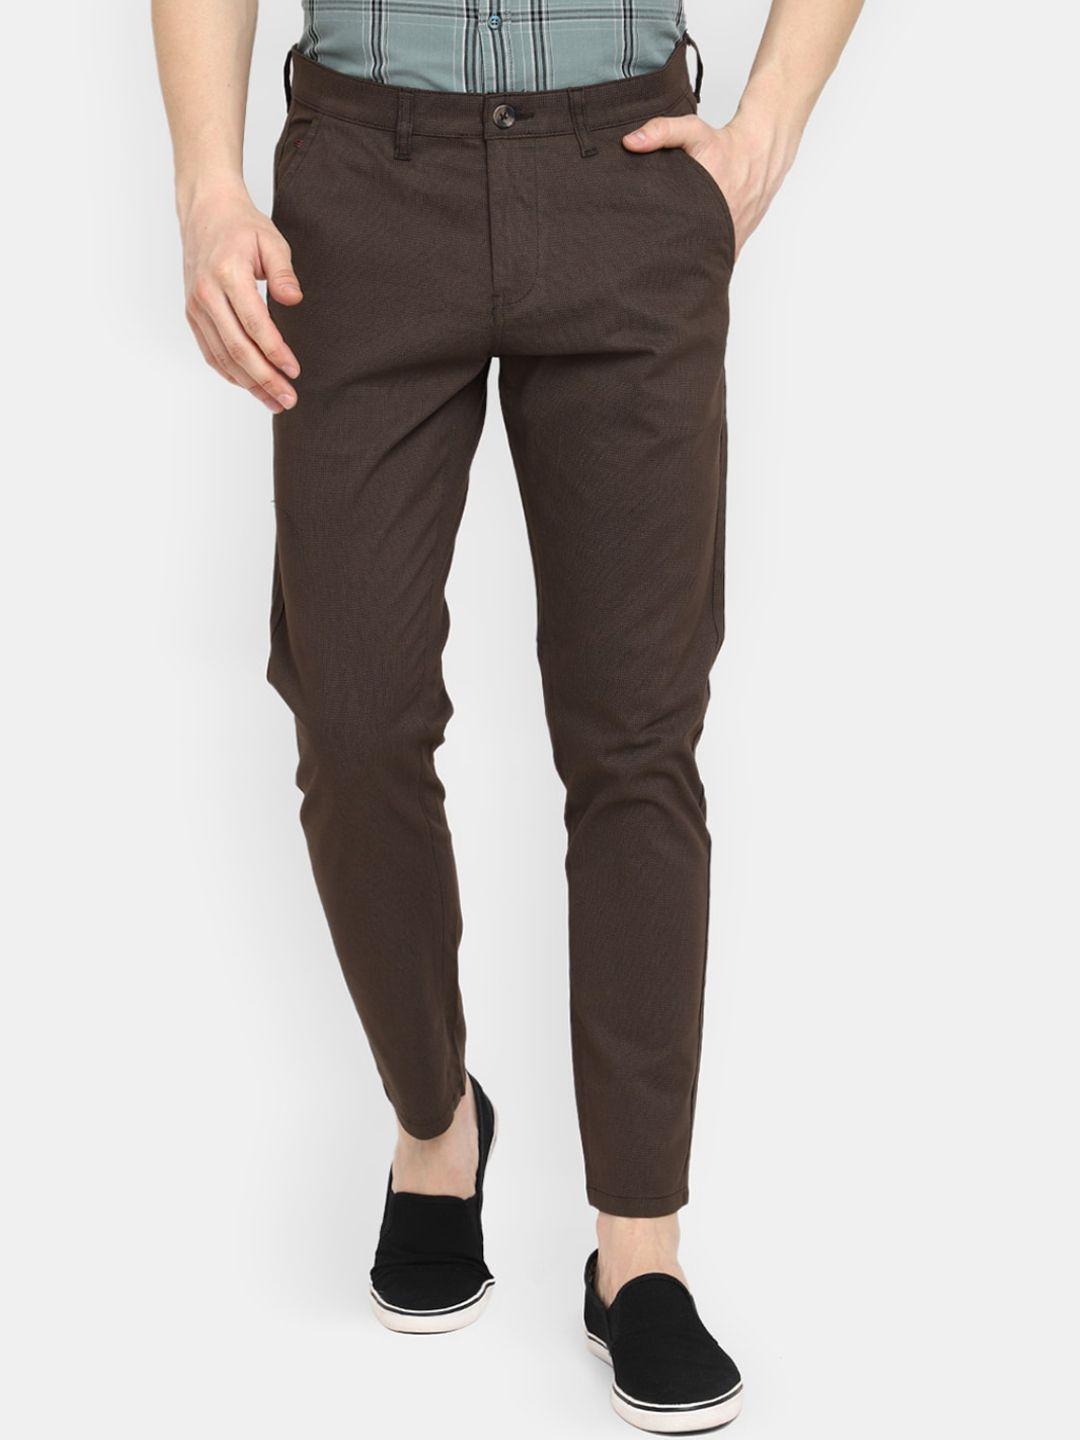 v-mart men brown trousers